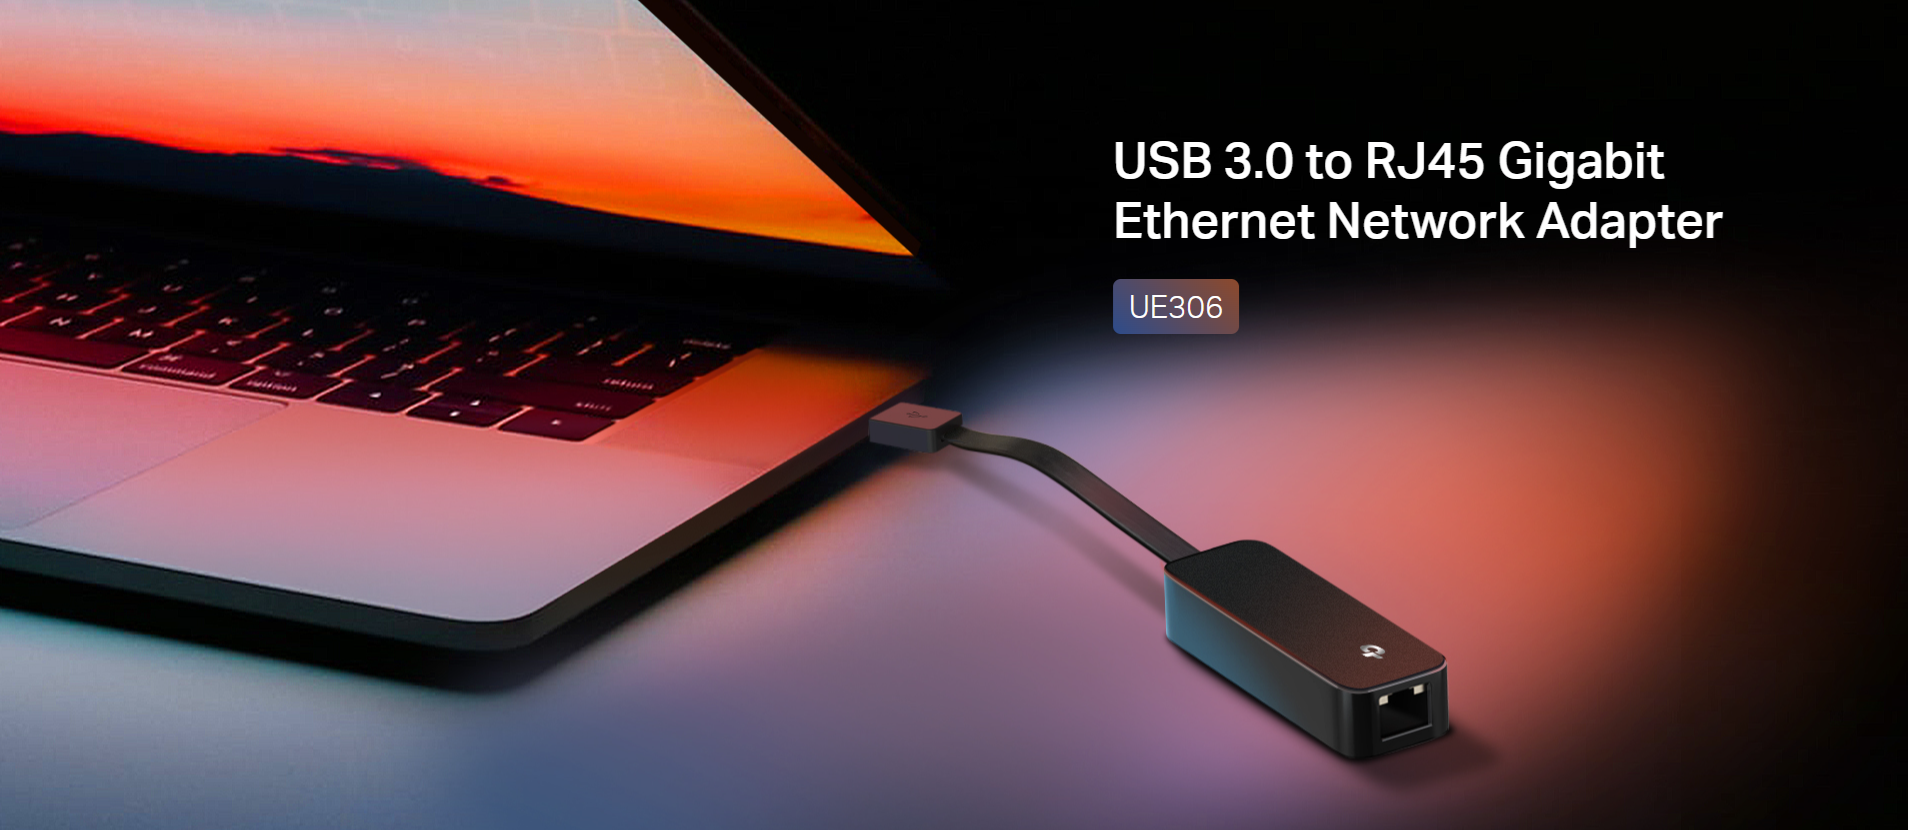 USB 3.0 to RJ45 Gigabit Ethernet Network Adapter